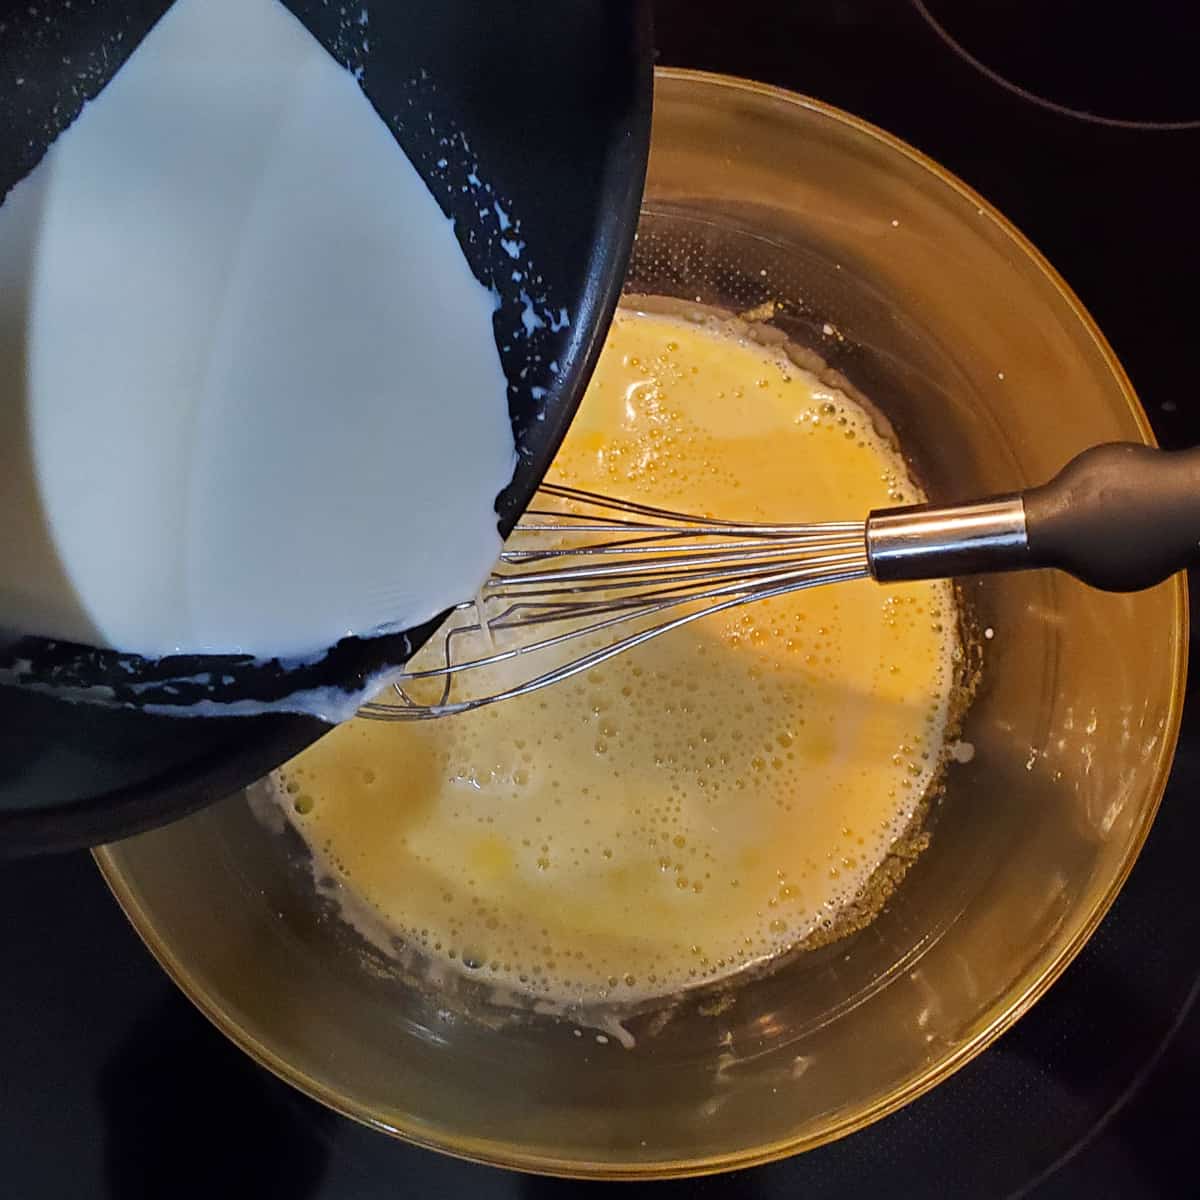 Chocolate custard mixing cream into eggs and sugar